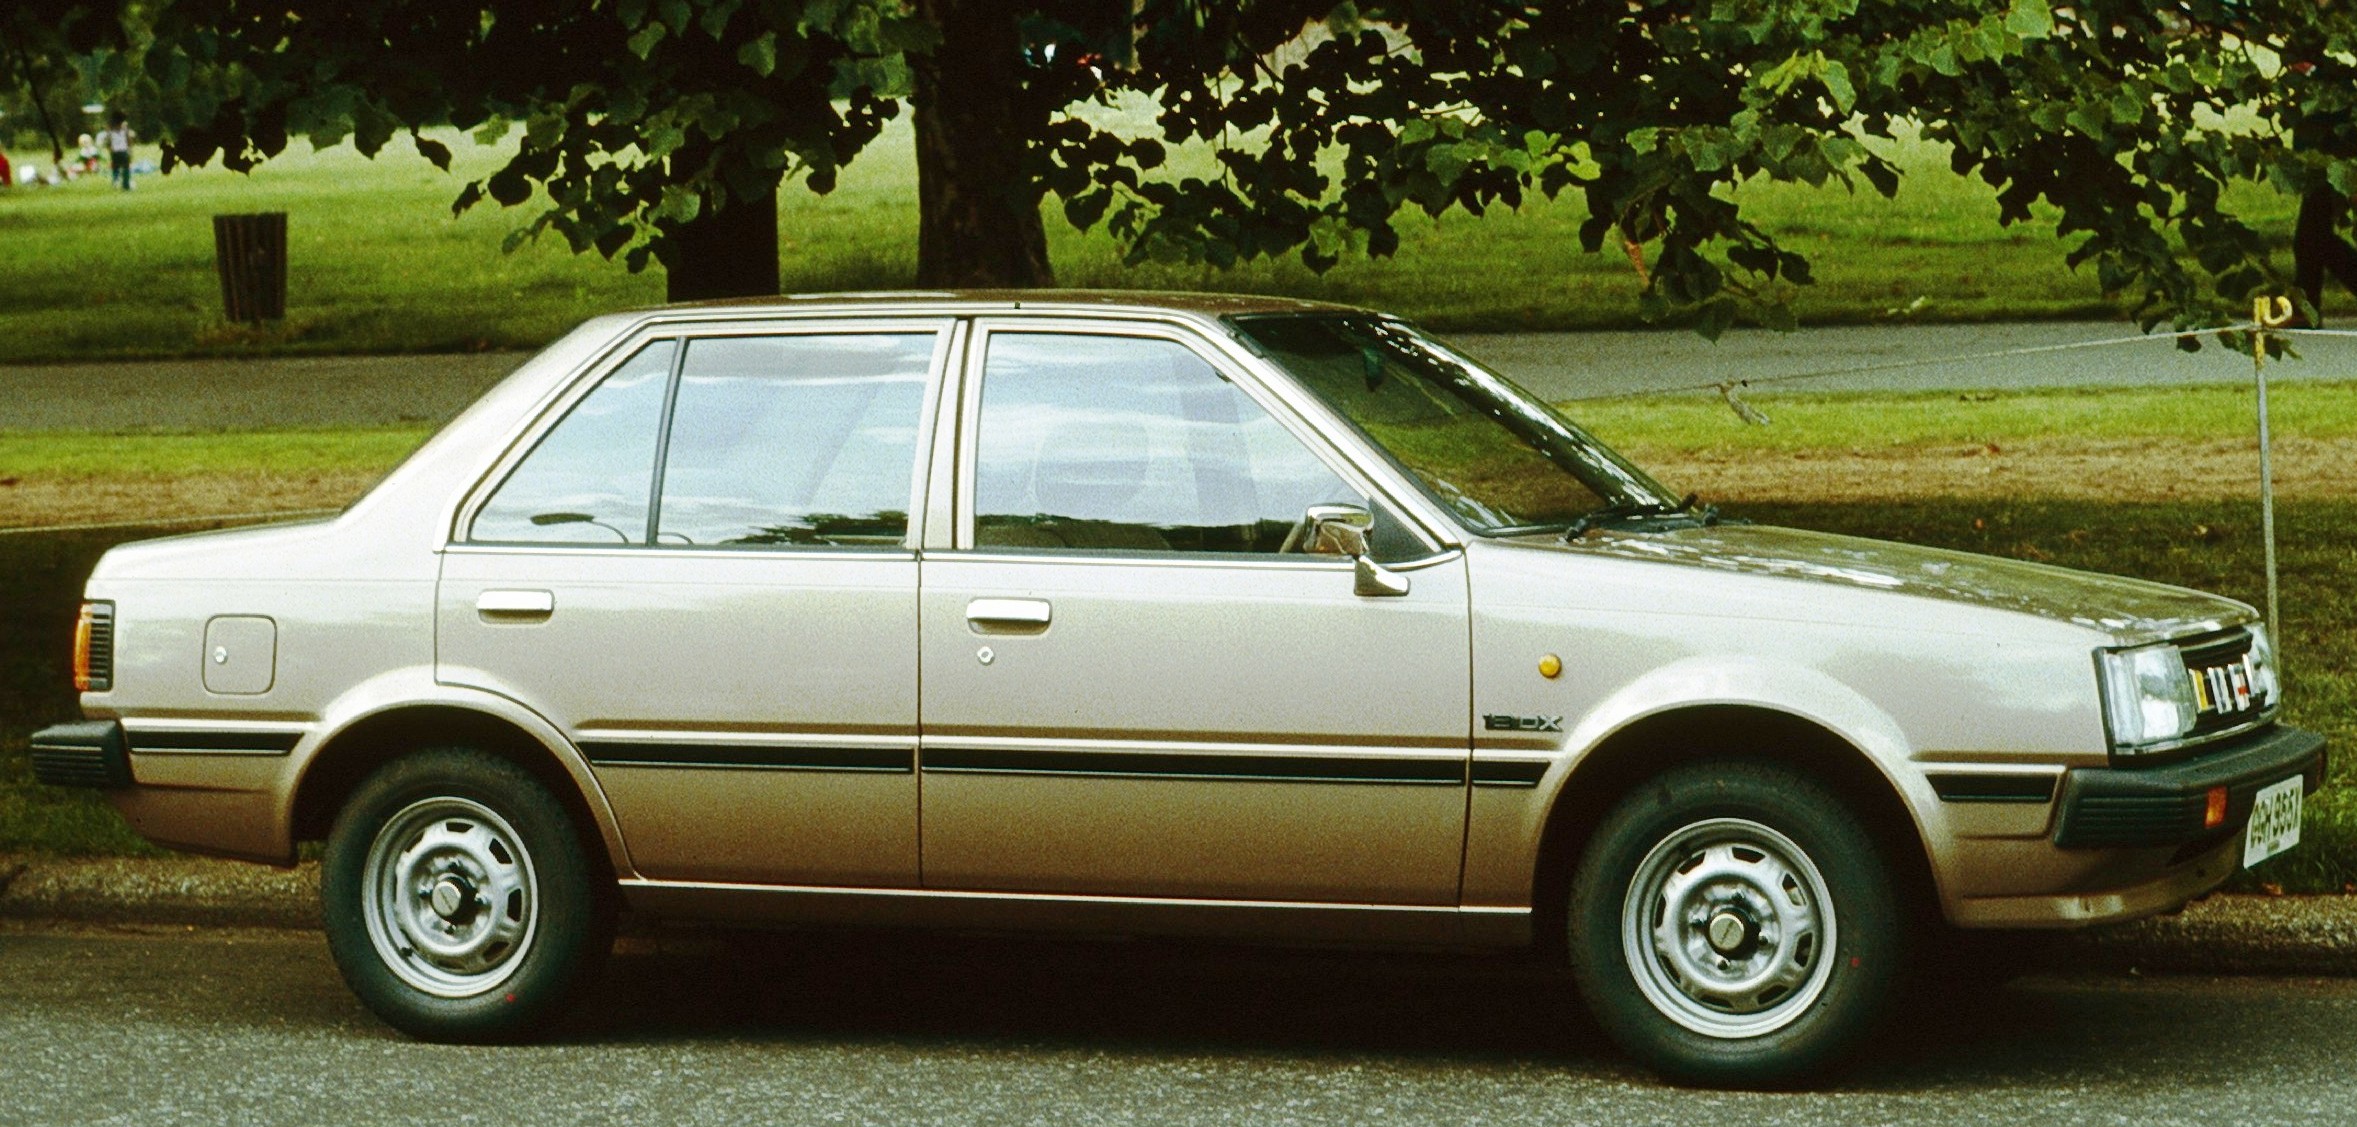 1982 Nissan sentra for sale #9